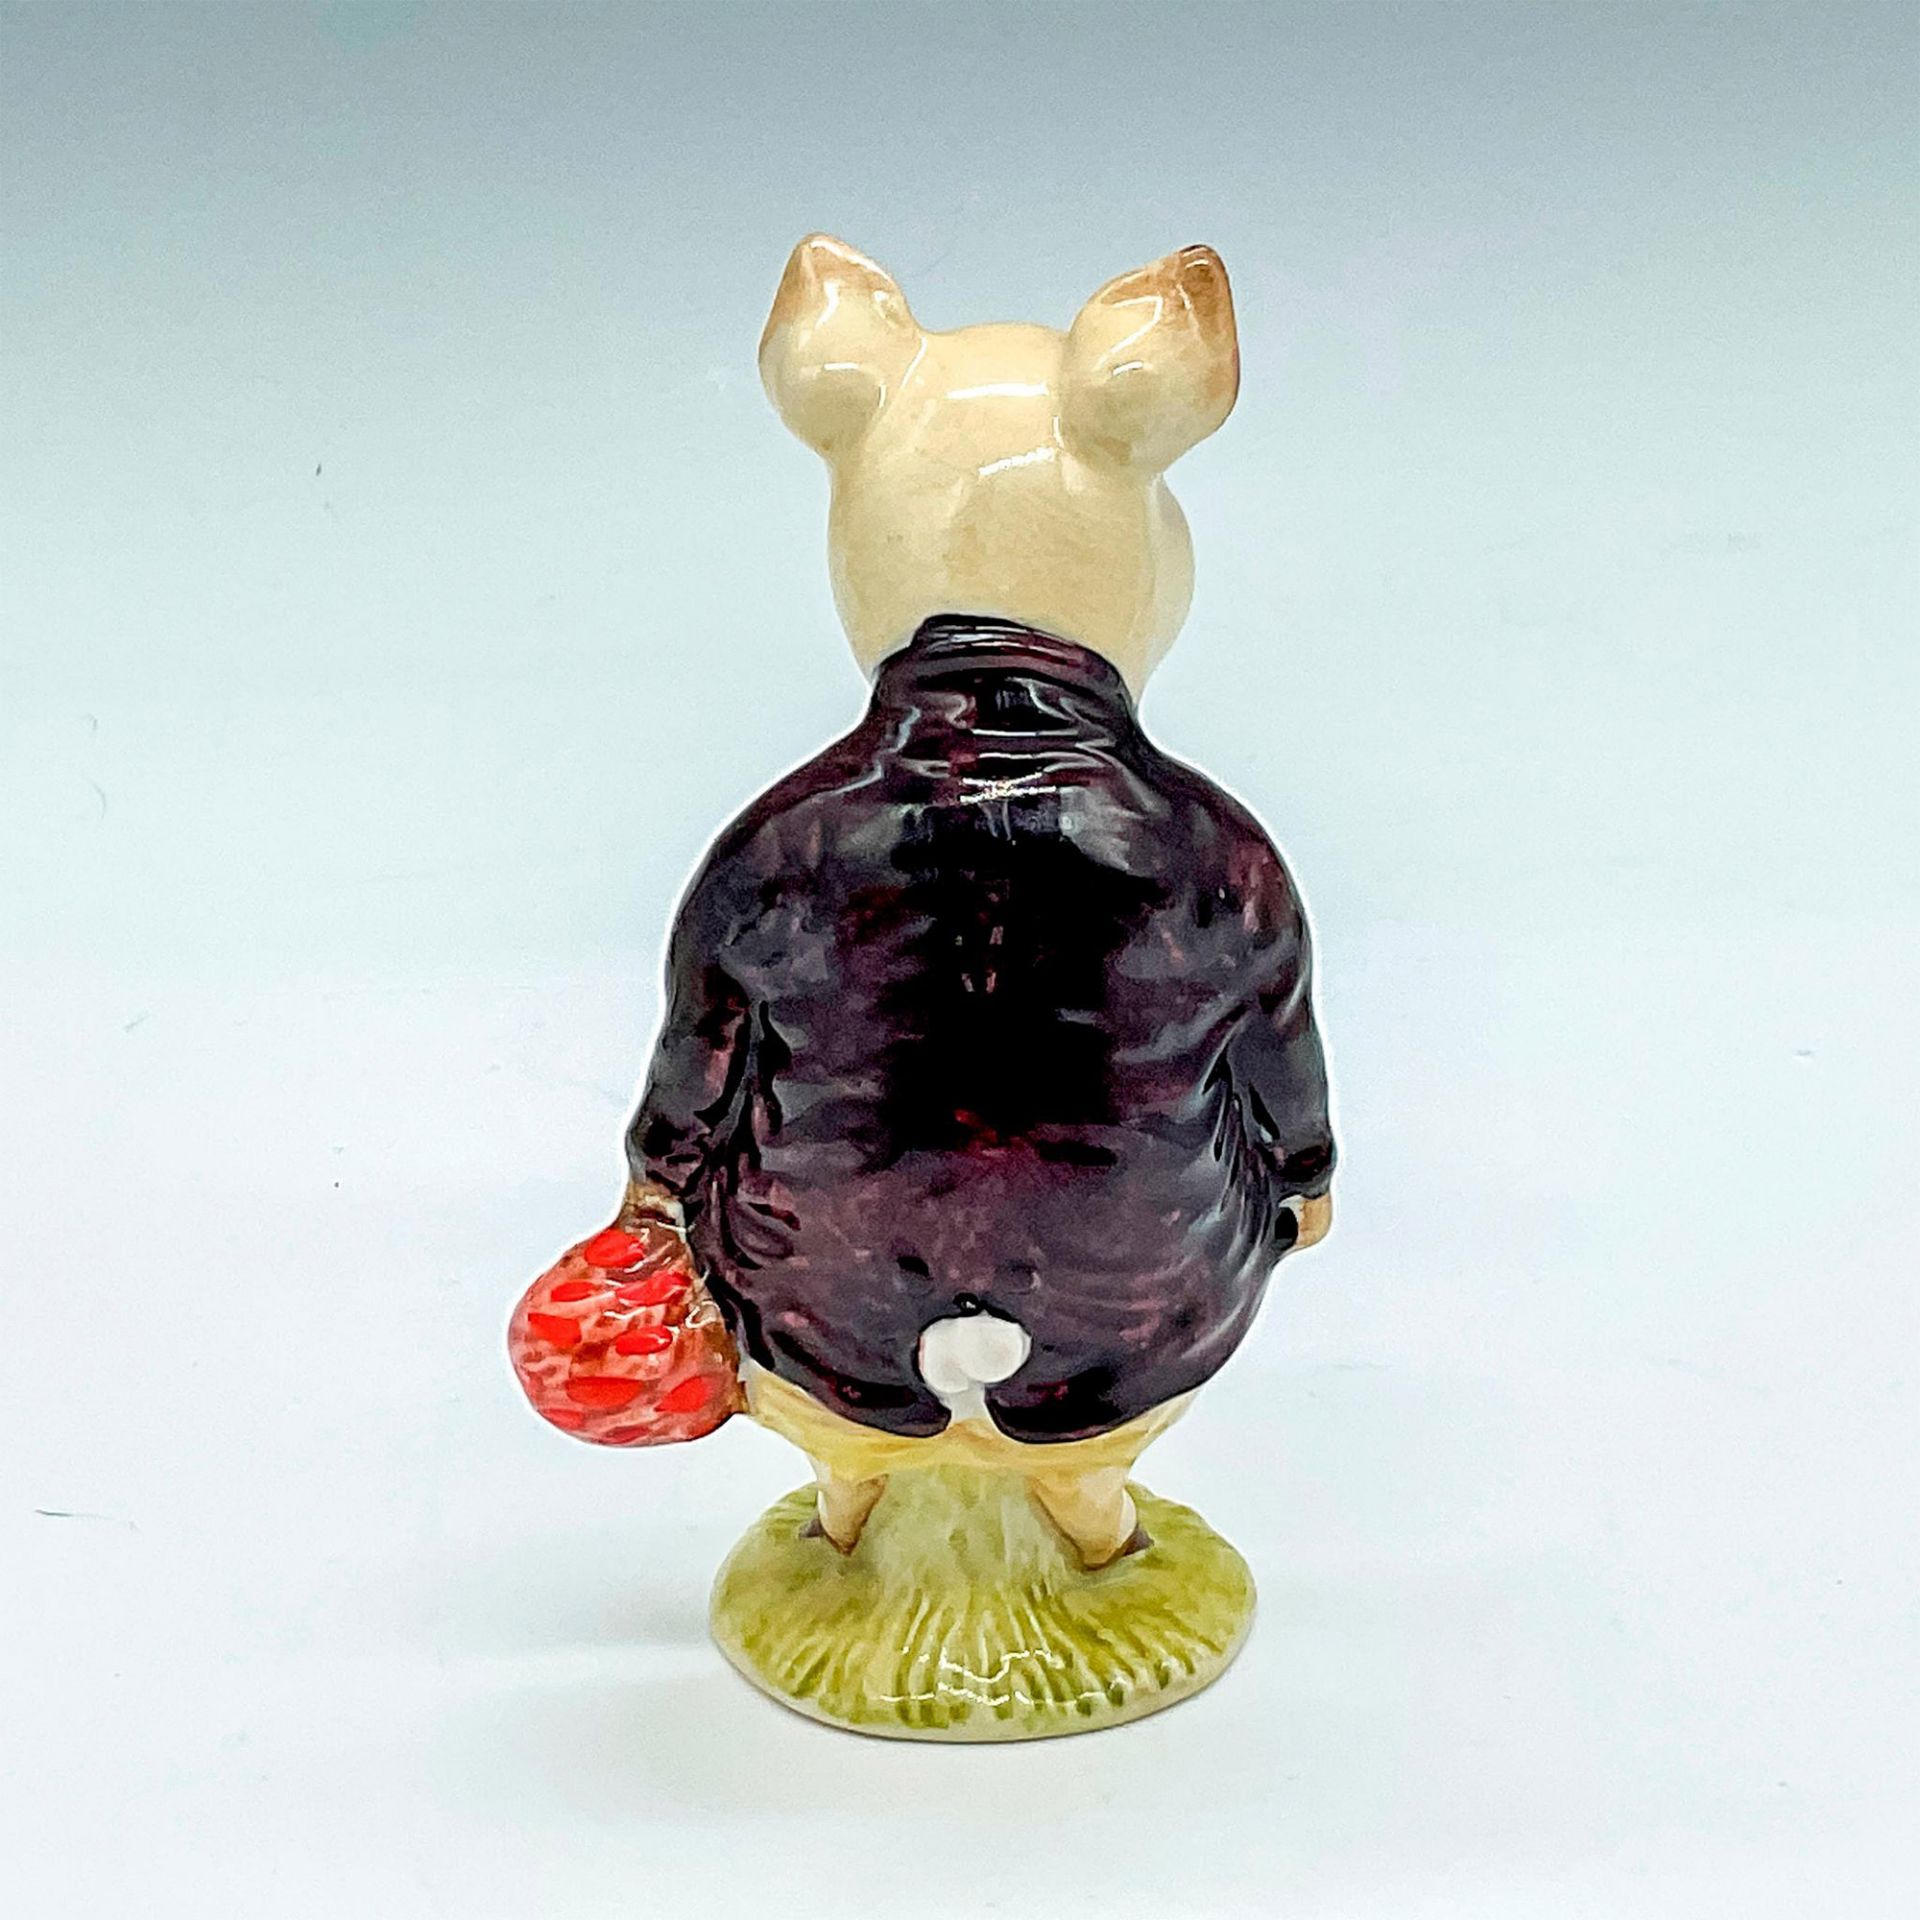 Beswick Beatrix Potter's Figurine, Pigling Bland - Image 2 of 3